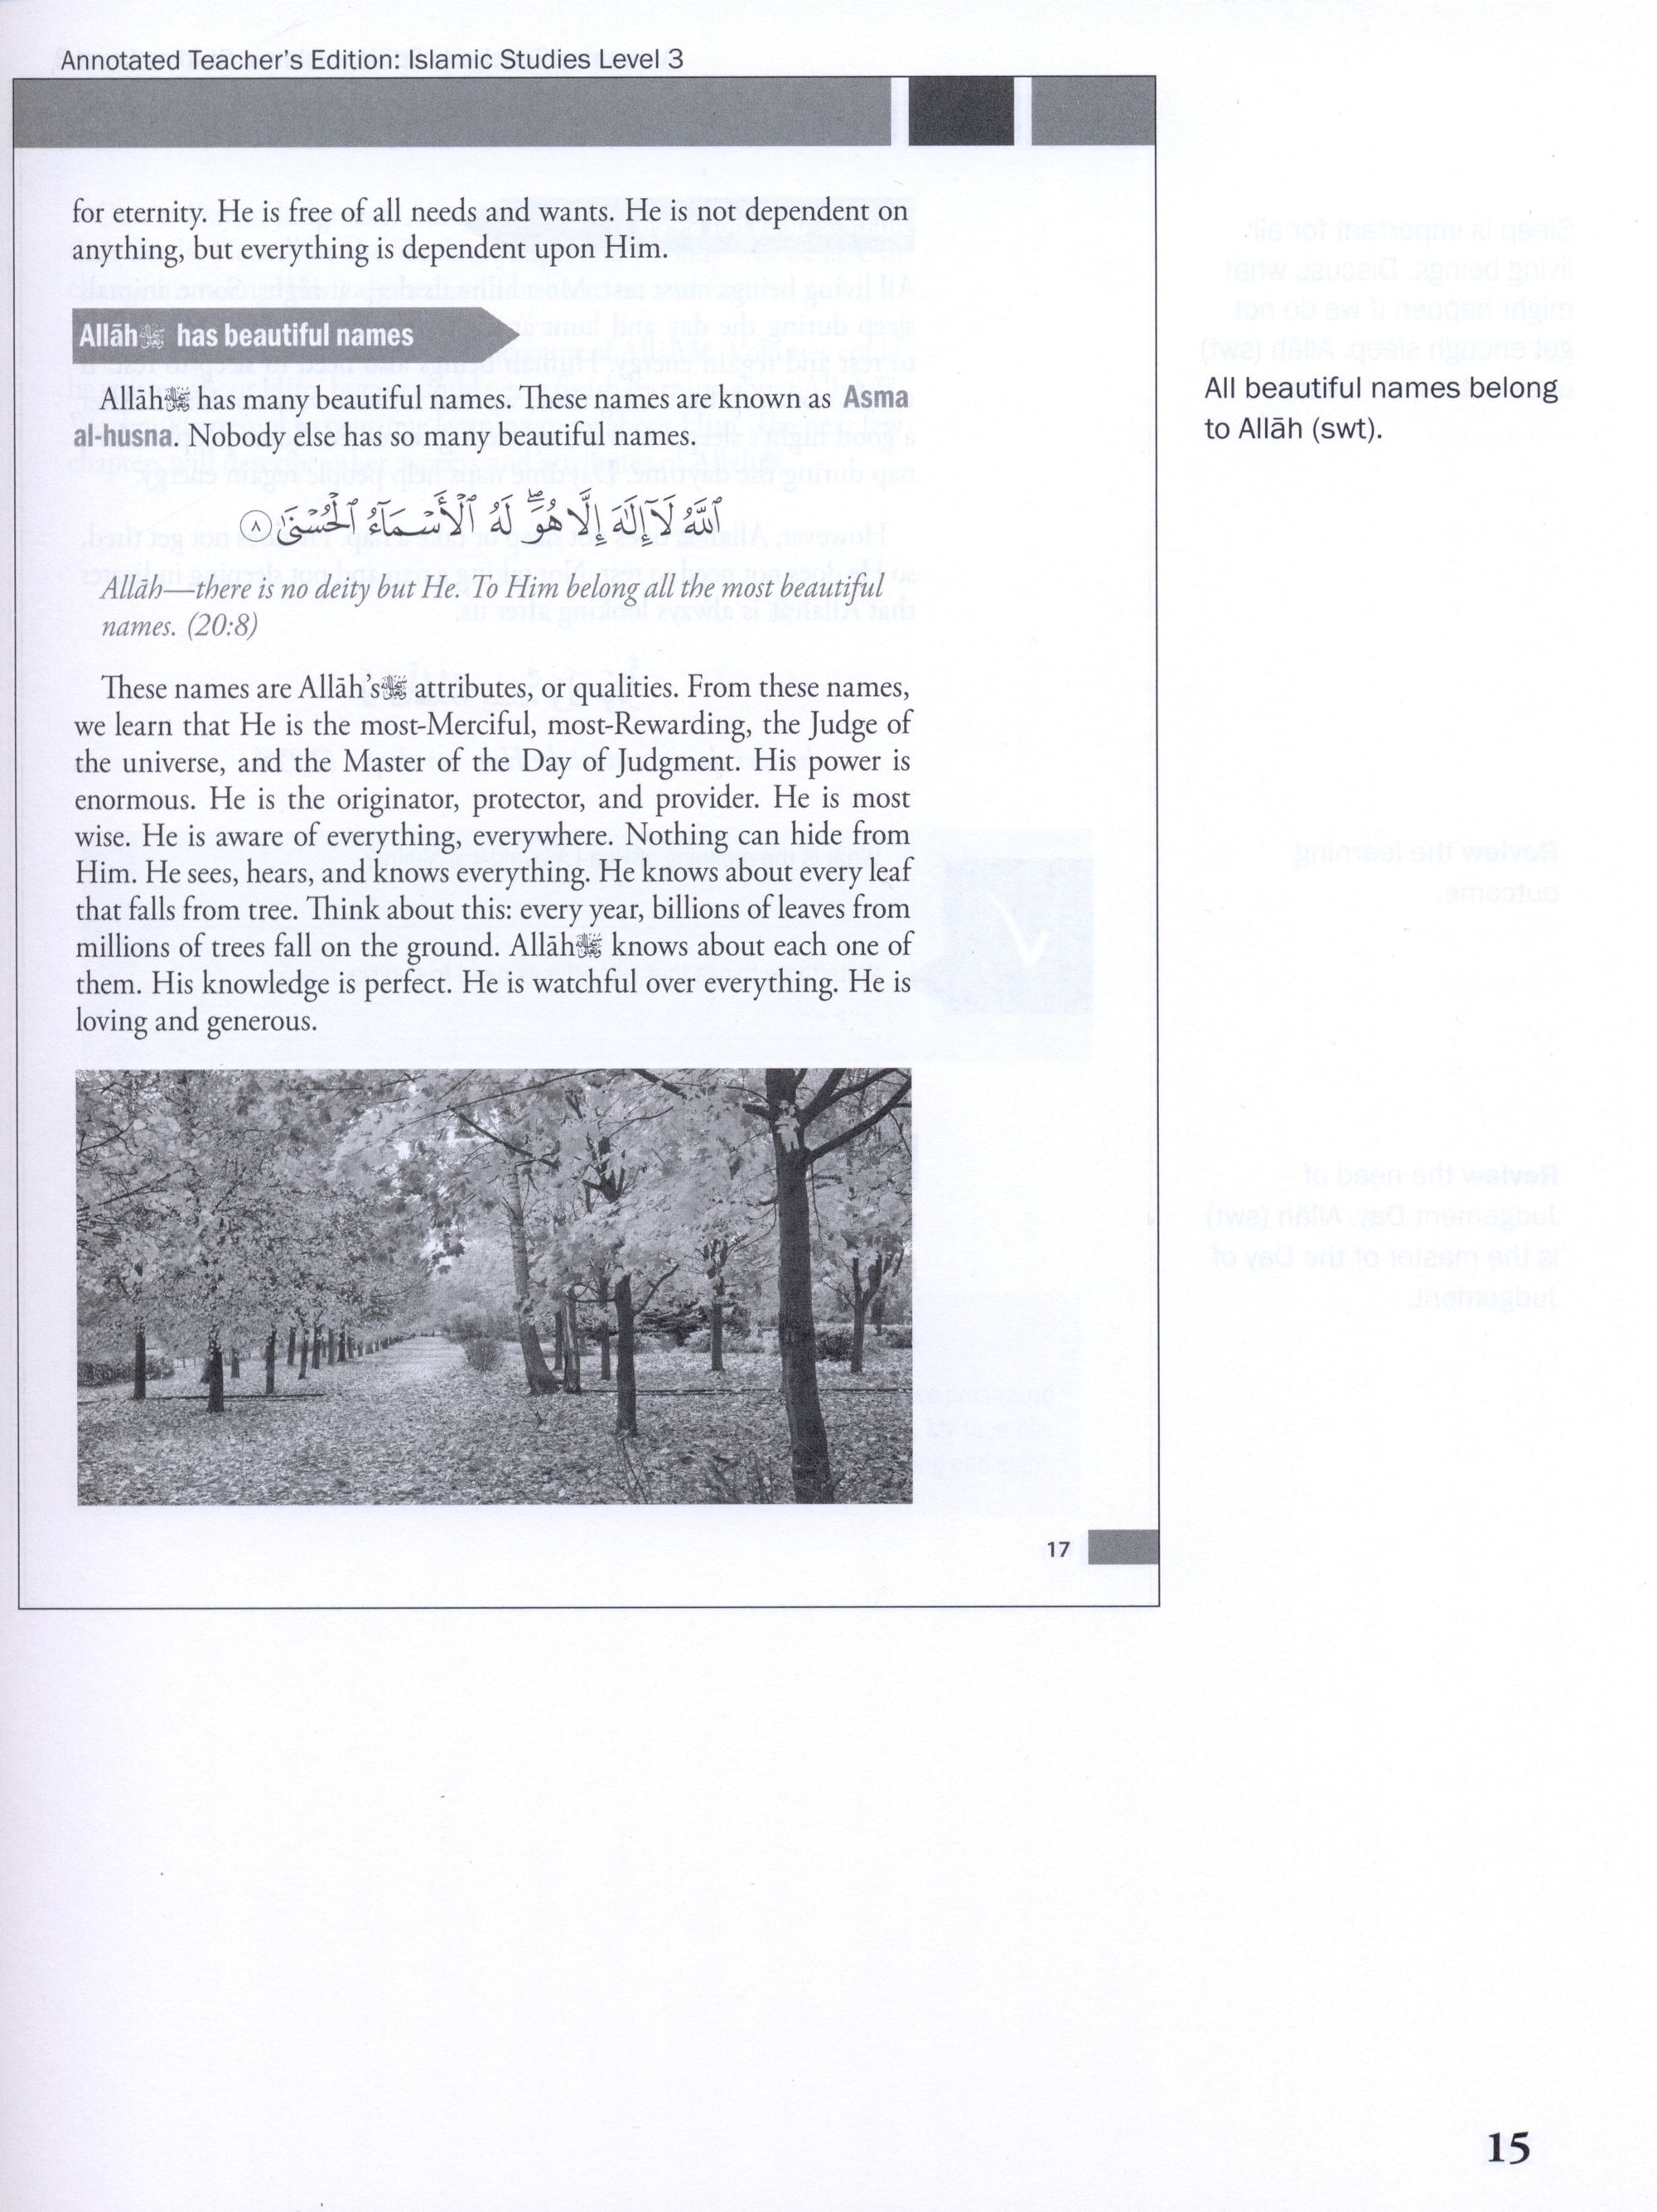 Weekend Learning Islamic Studies Teacher Manual Level 3